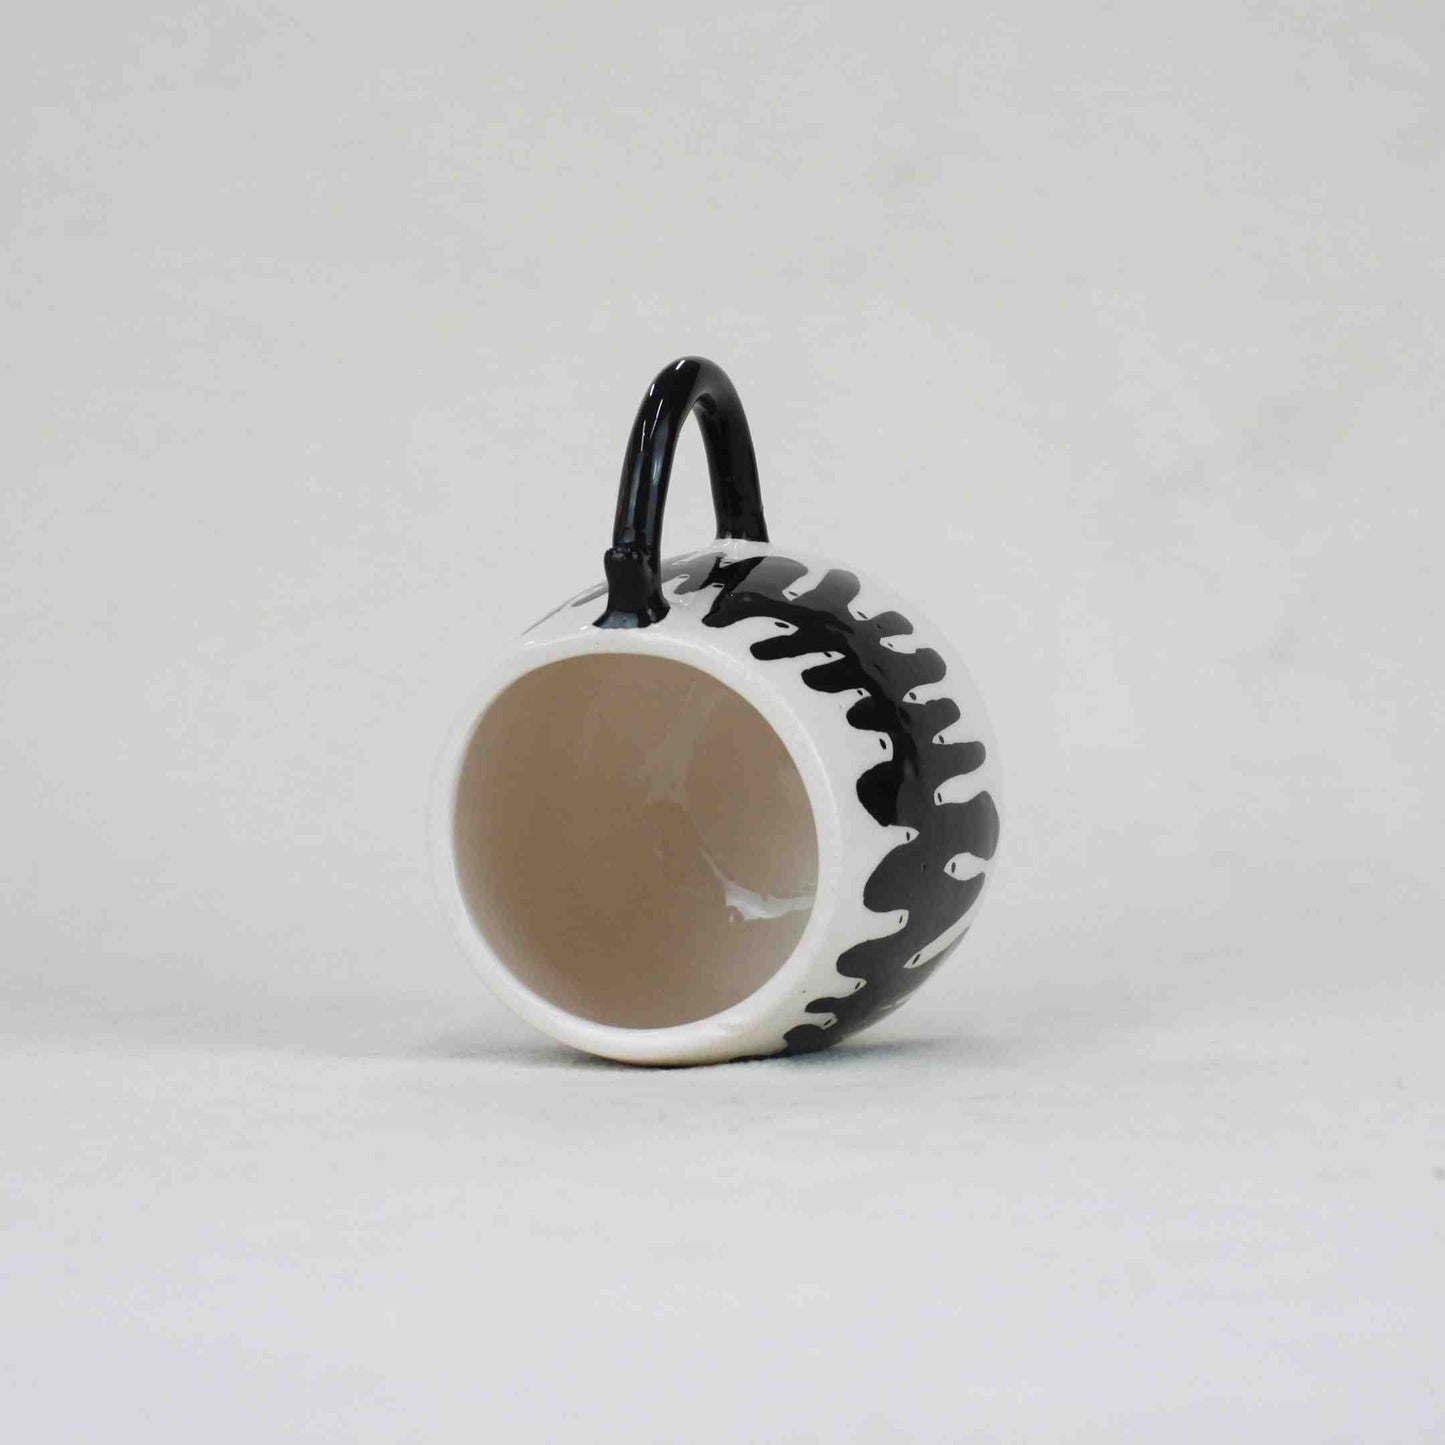 "Ink" Large Ceramic Mug, Design Ceramic Kitchenware